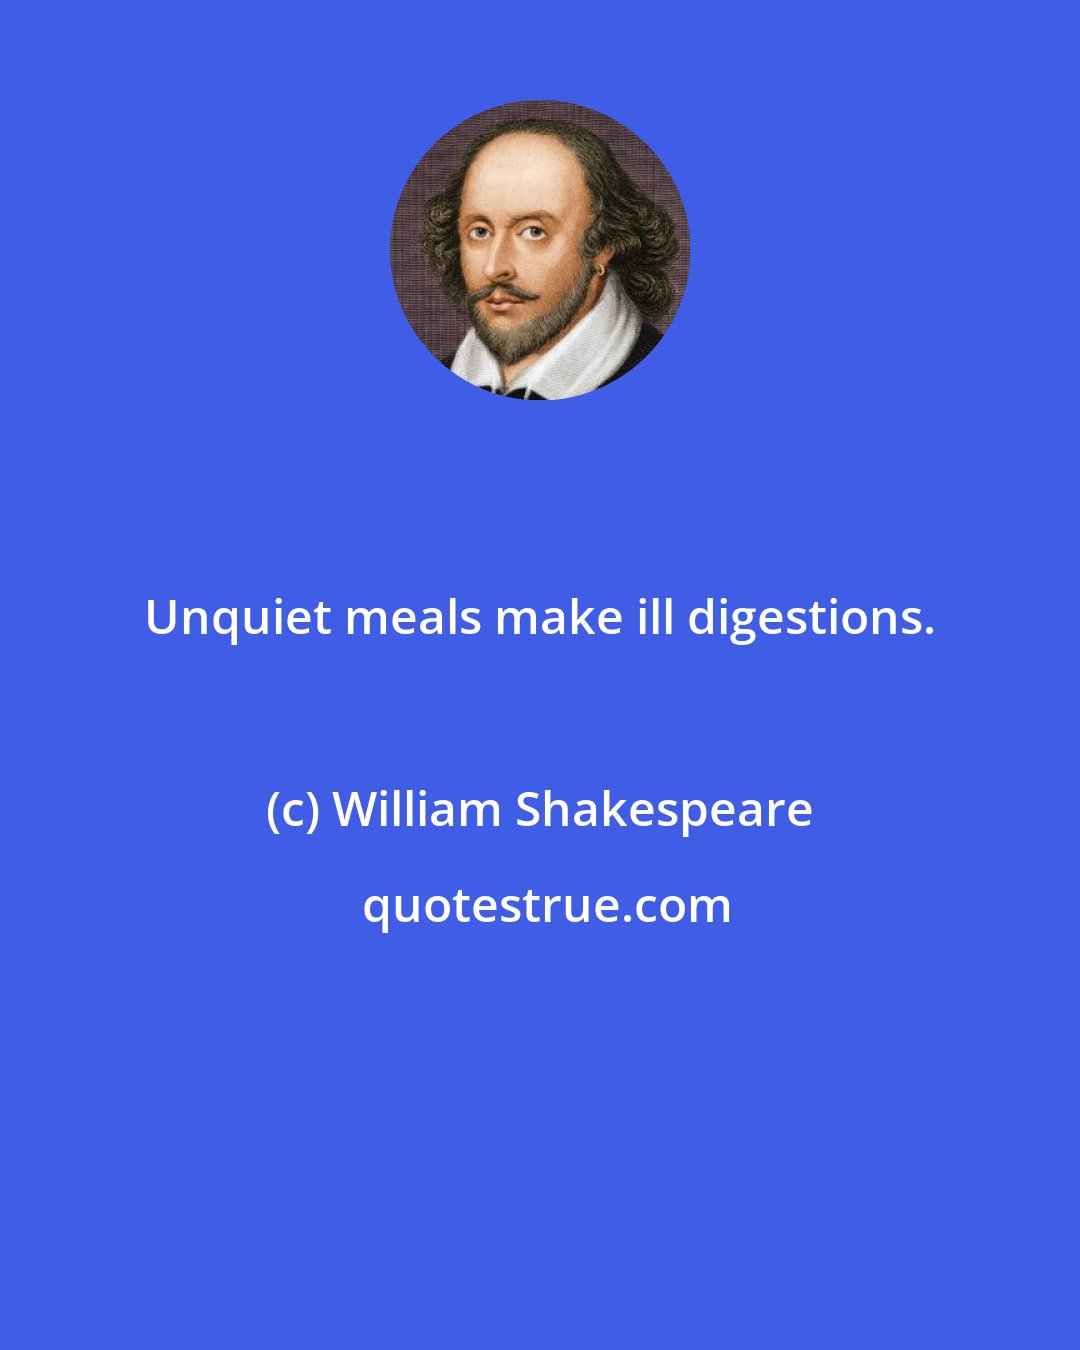 William Shakespeare: Unquiet meals make ill digestions.